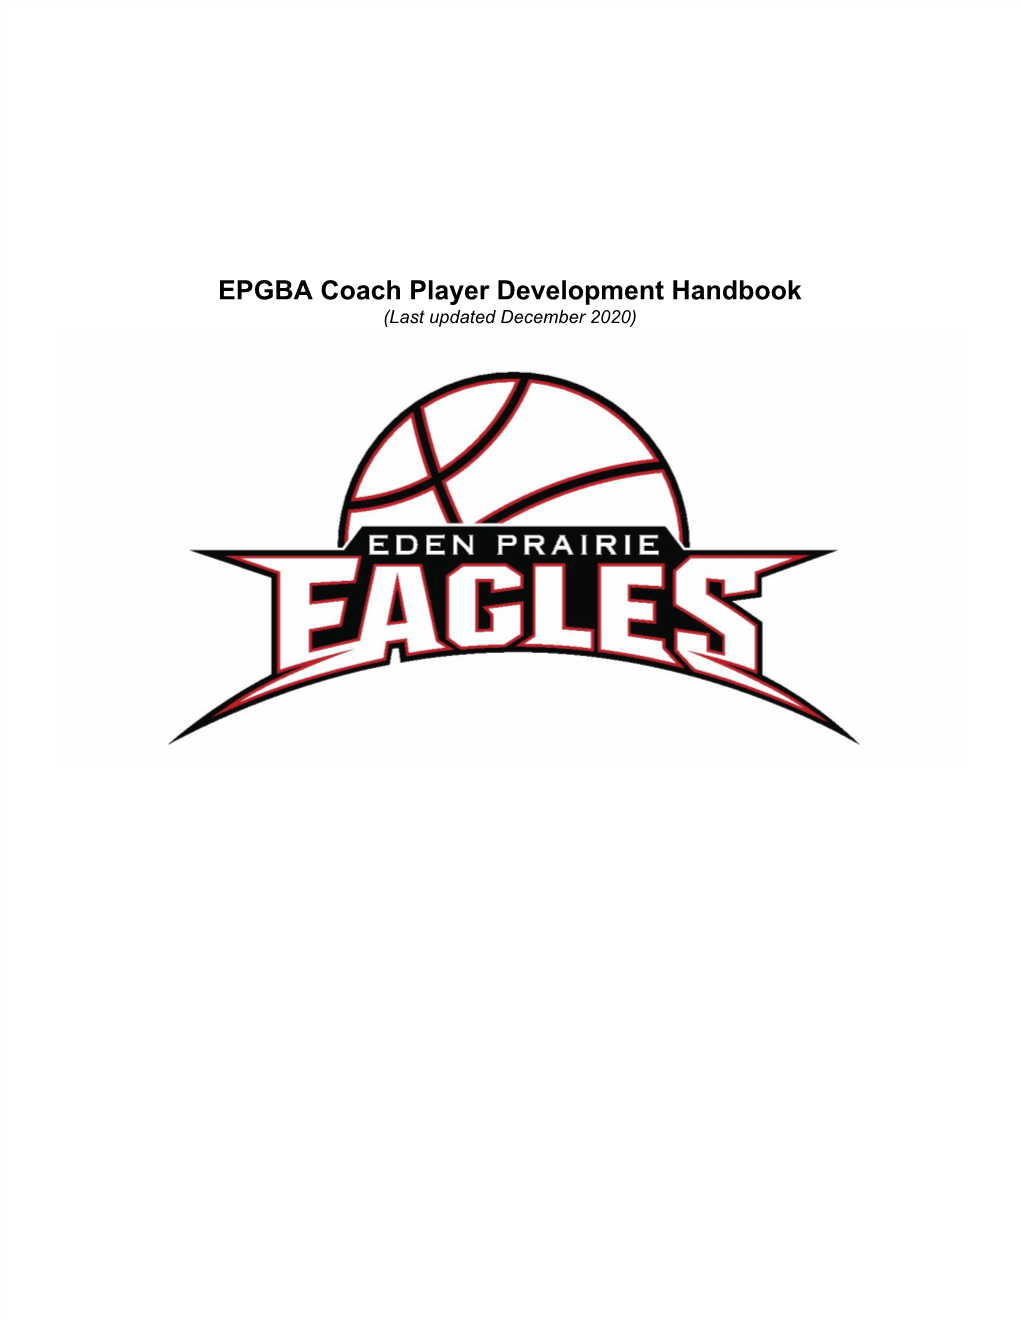 EPGBA Coach Player Development Handbook (Last Updated December 2020)